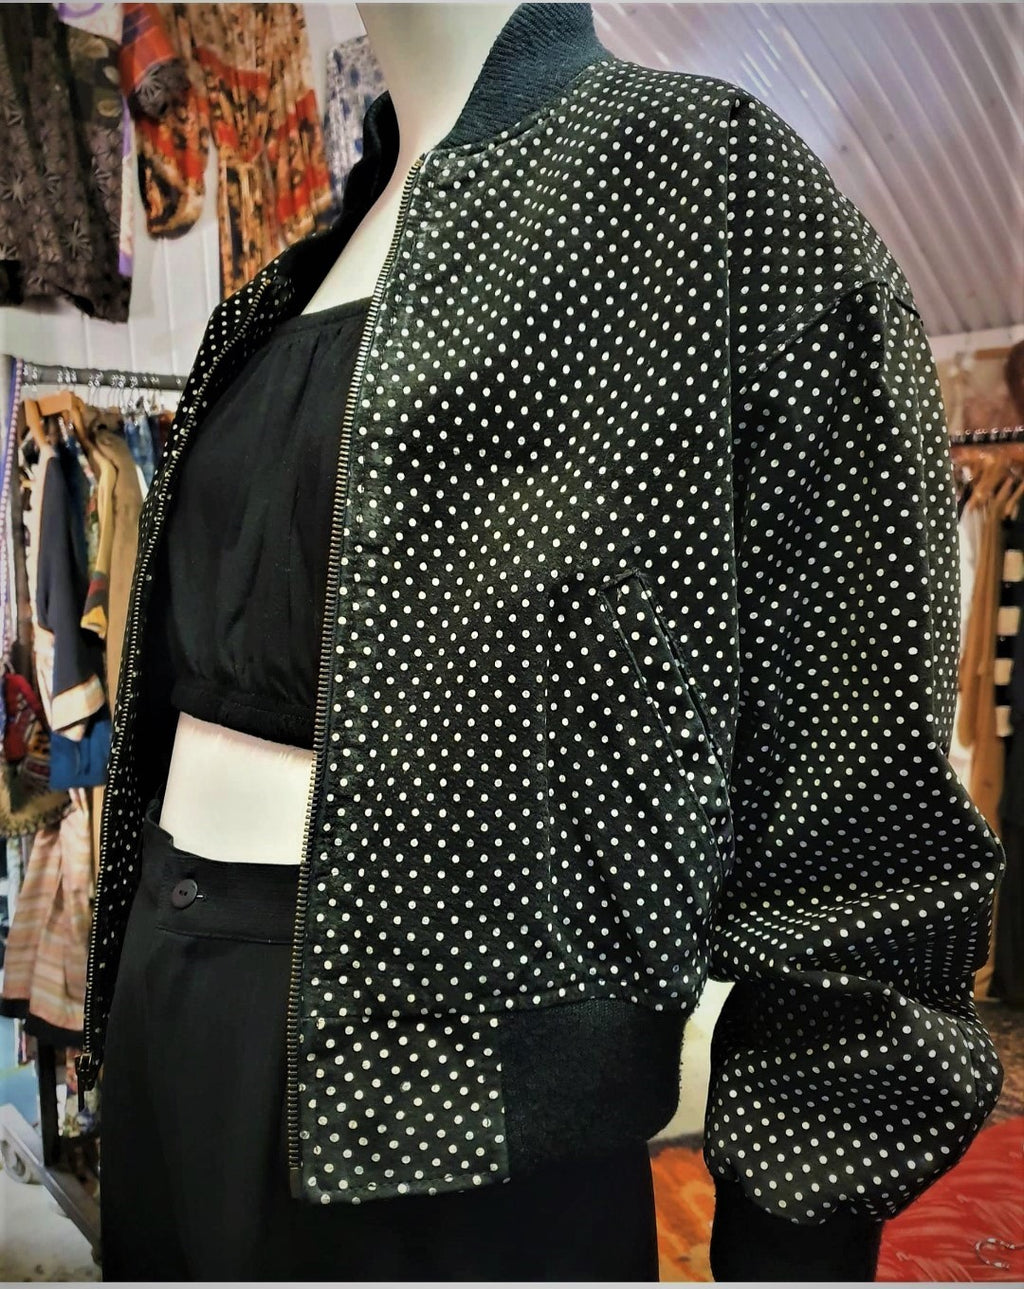 90s Polka Dot Print Leather Jacket